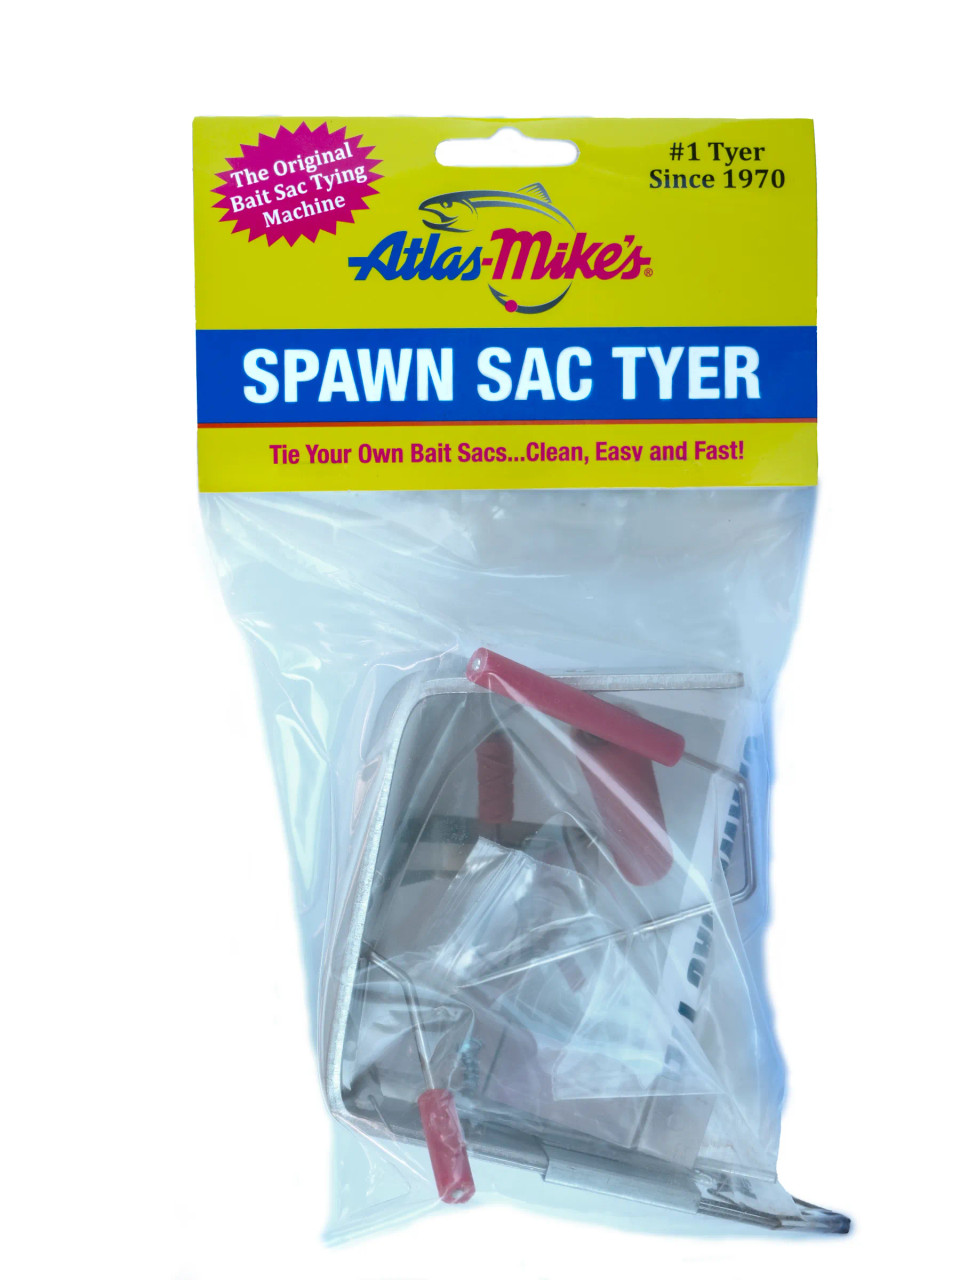 Atlas Mike's Spawn Sac Tyer Kit